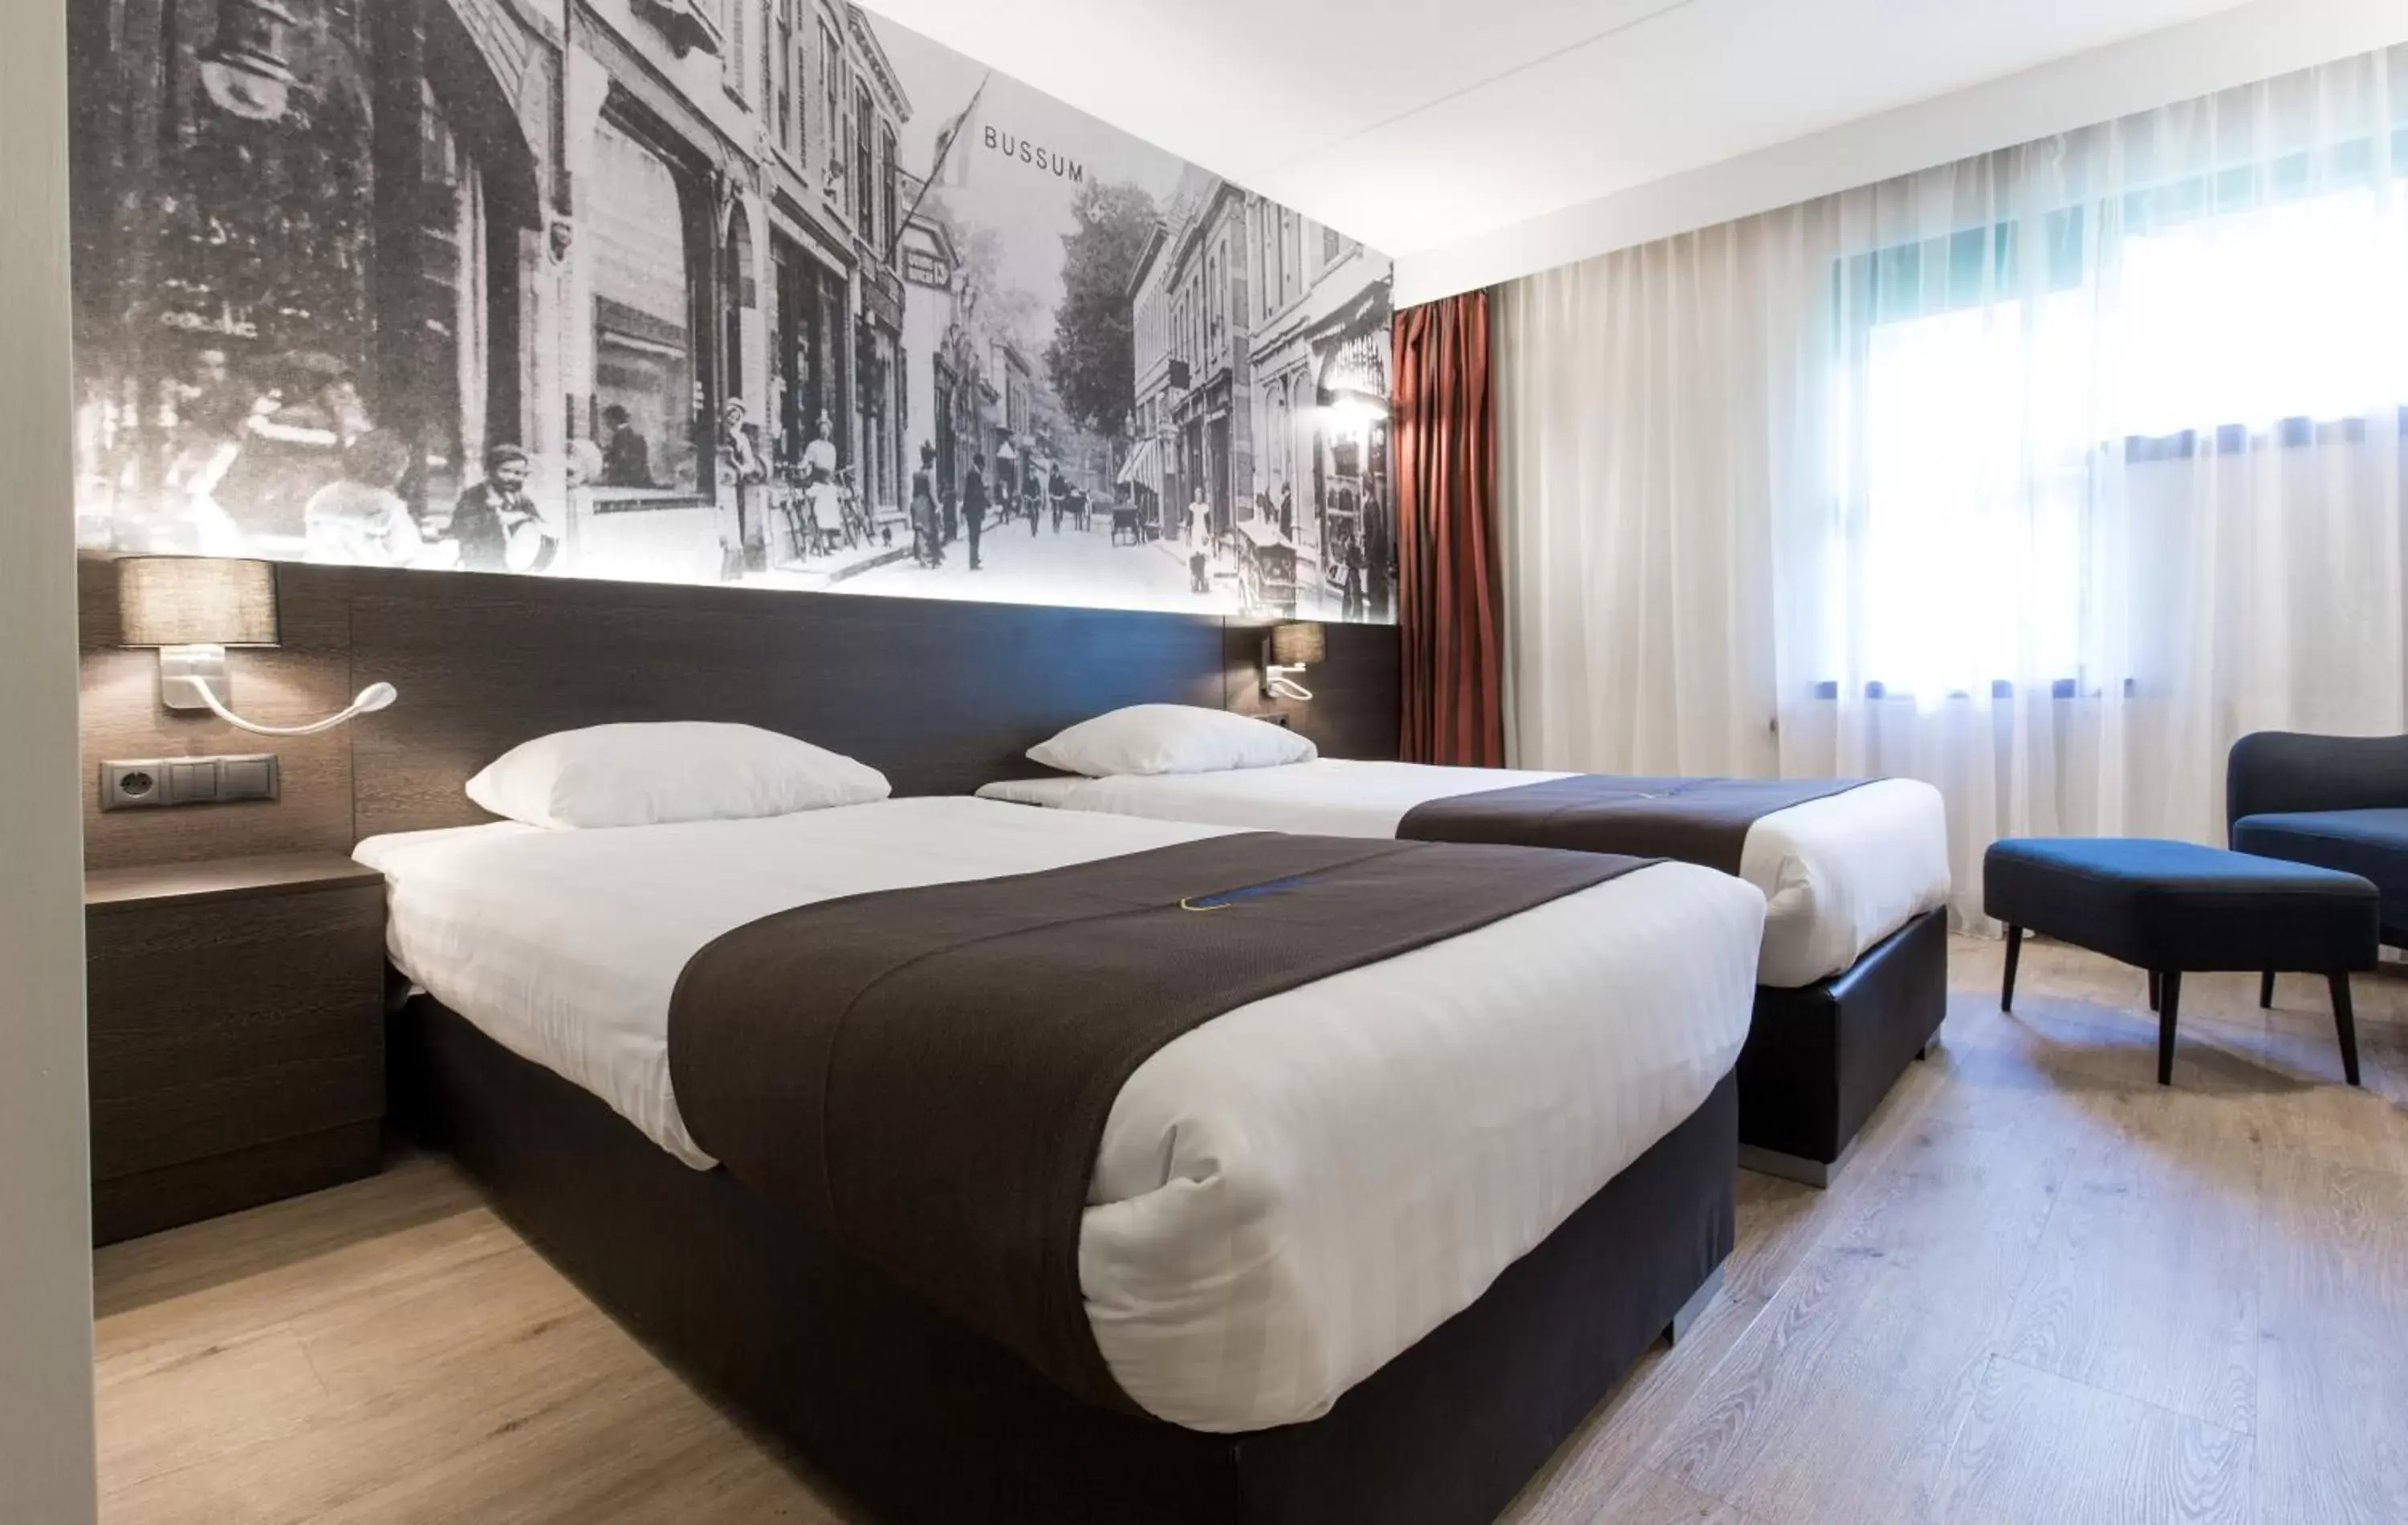 Bedroom, Bed in Bastion Hotel Bussum Hilversum